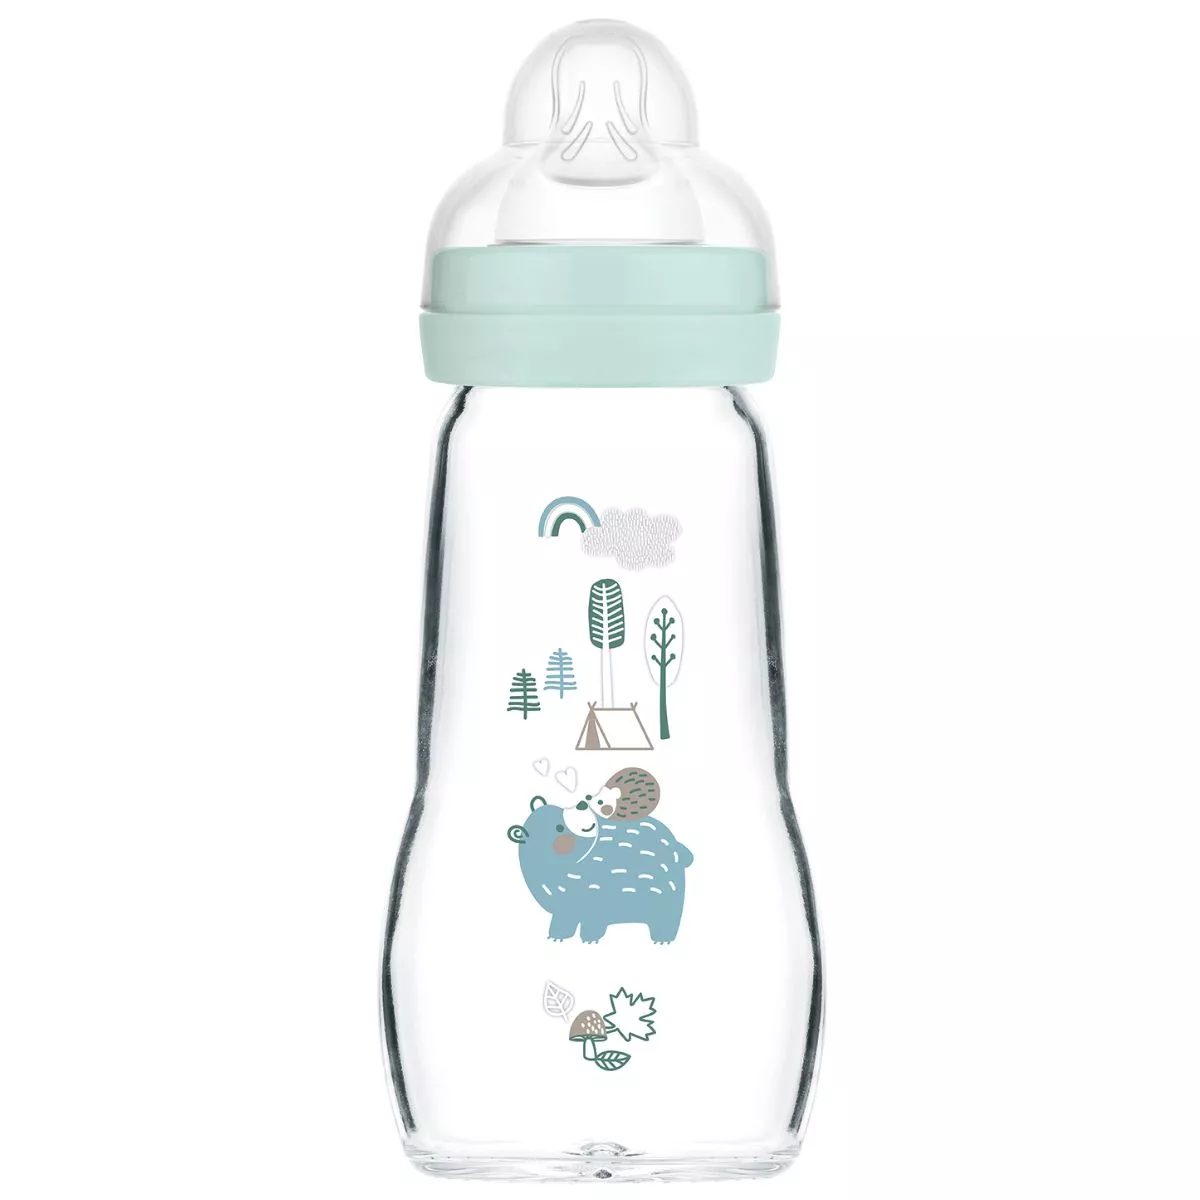 Feel Good 260ml Forest - Szklana butelka dla niemowląt